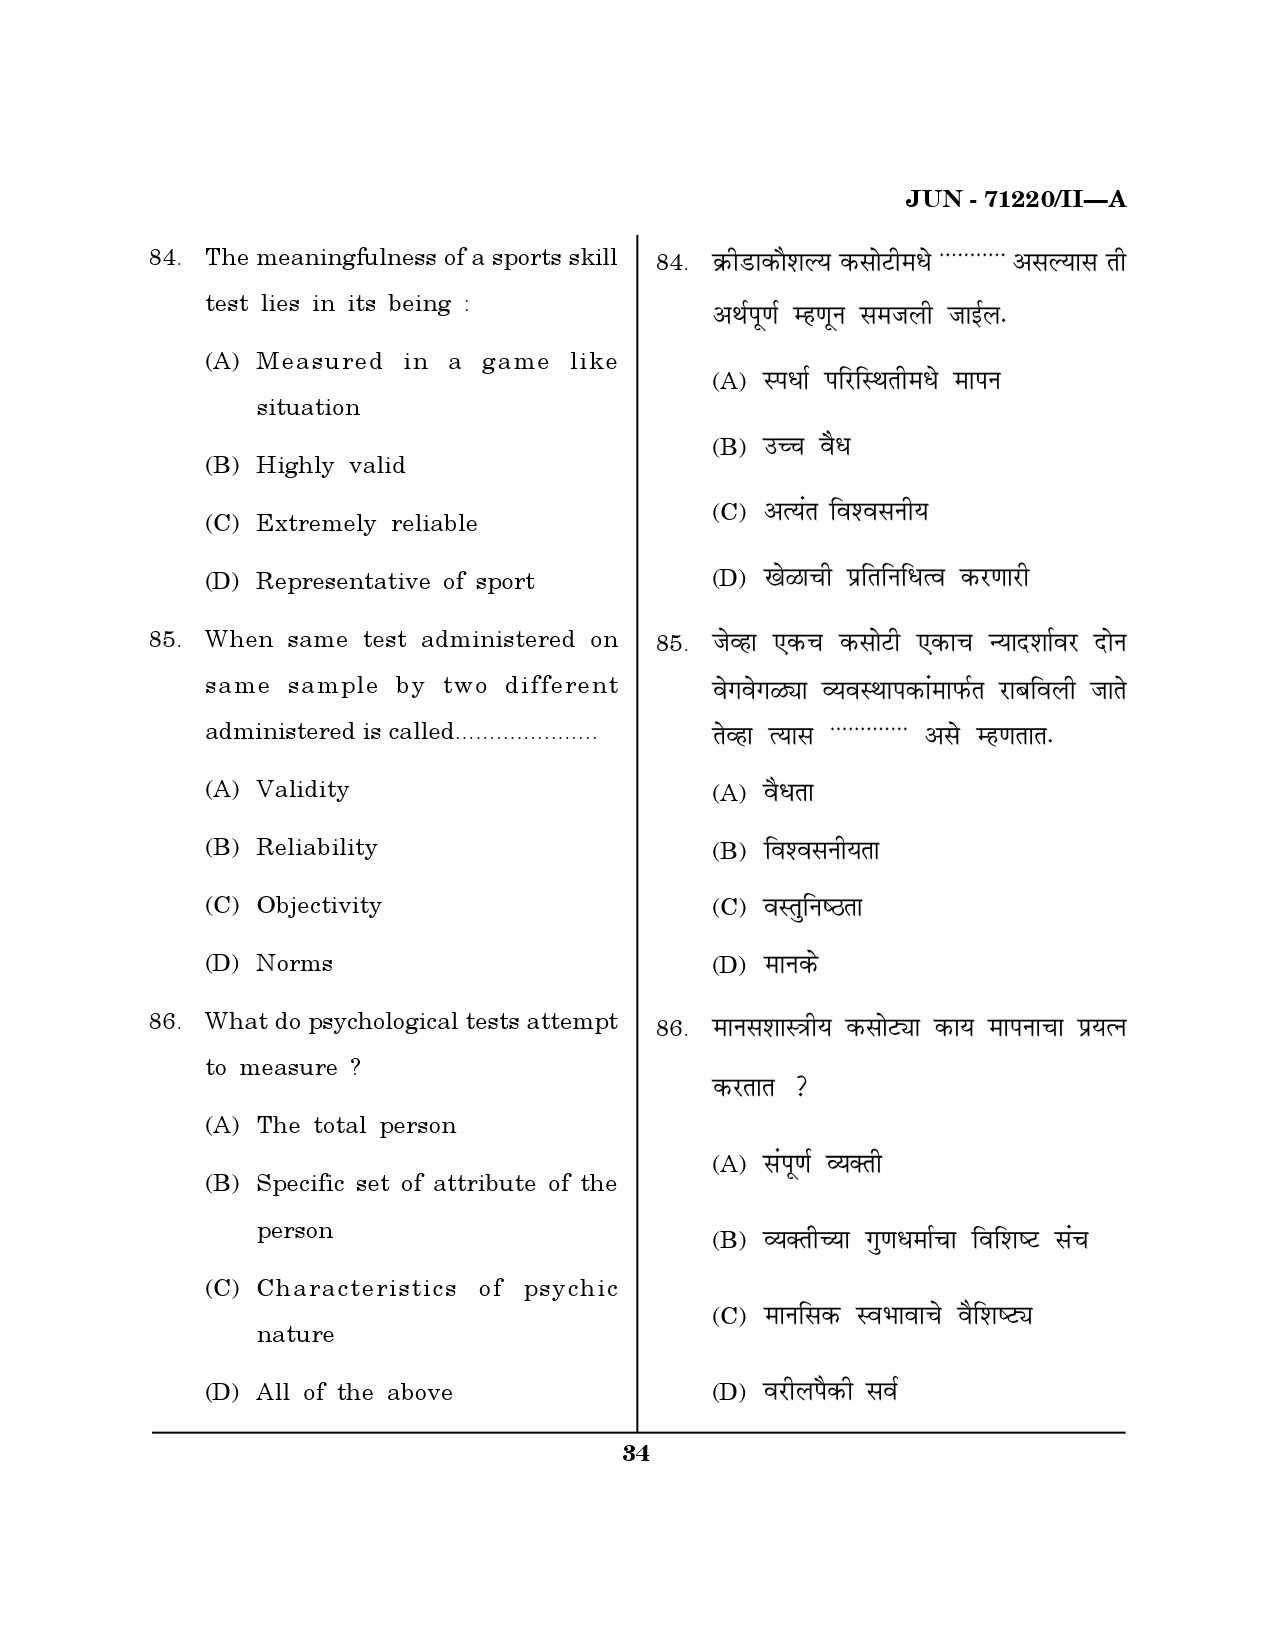 Maharashtra SET Physical Education Question Paper II June 2020 33